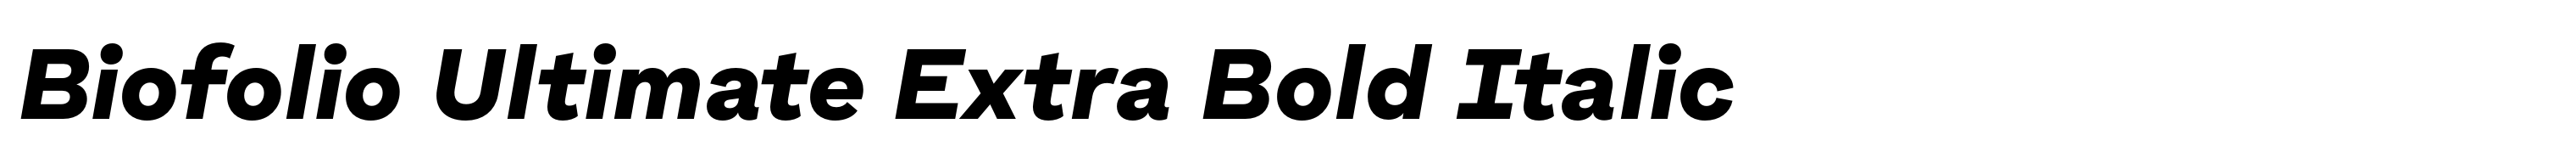 Biofolio Ultimate Extra Bold Italic